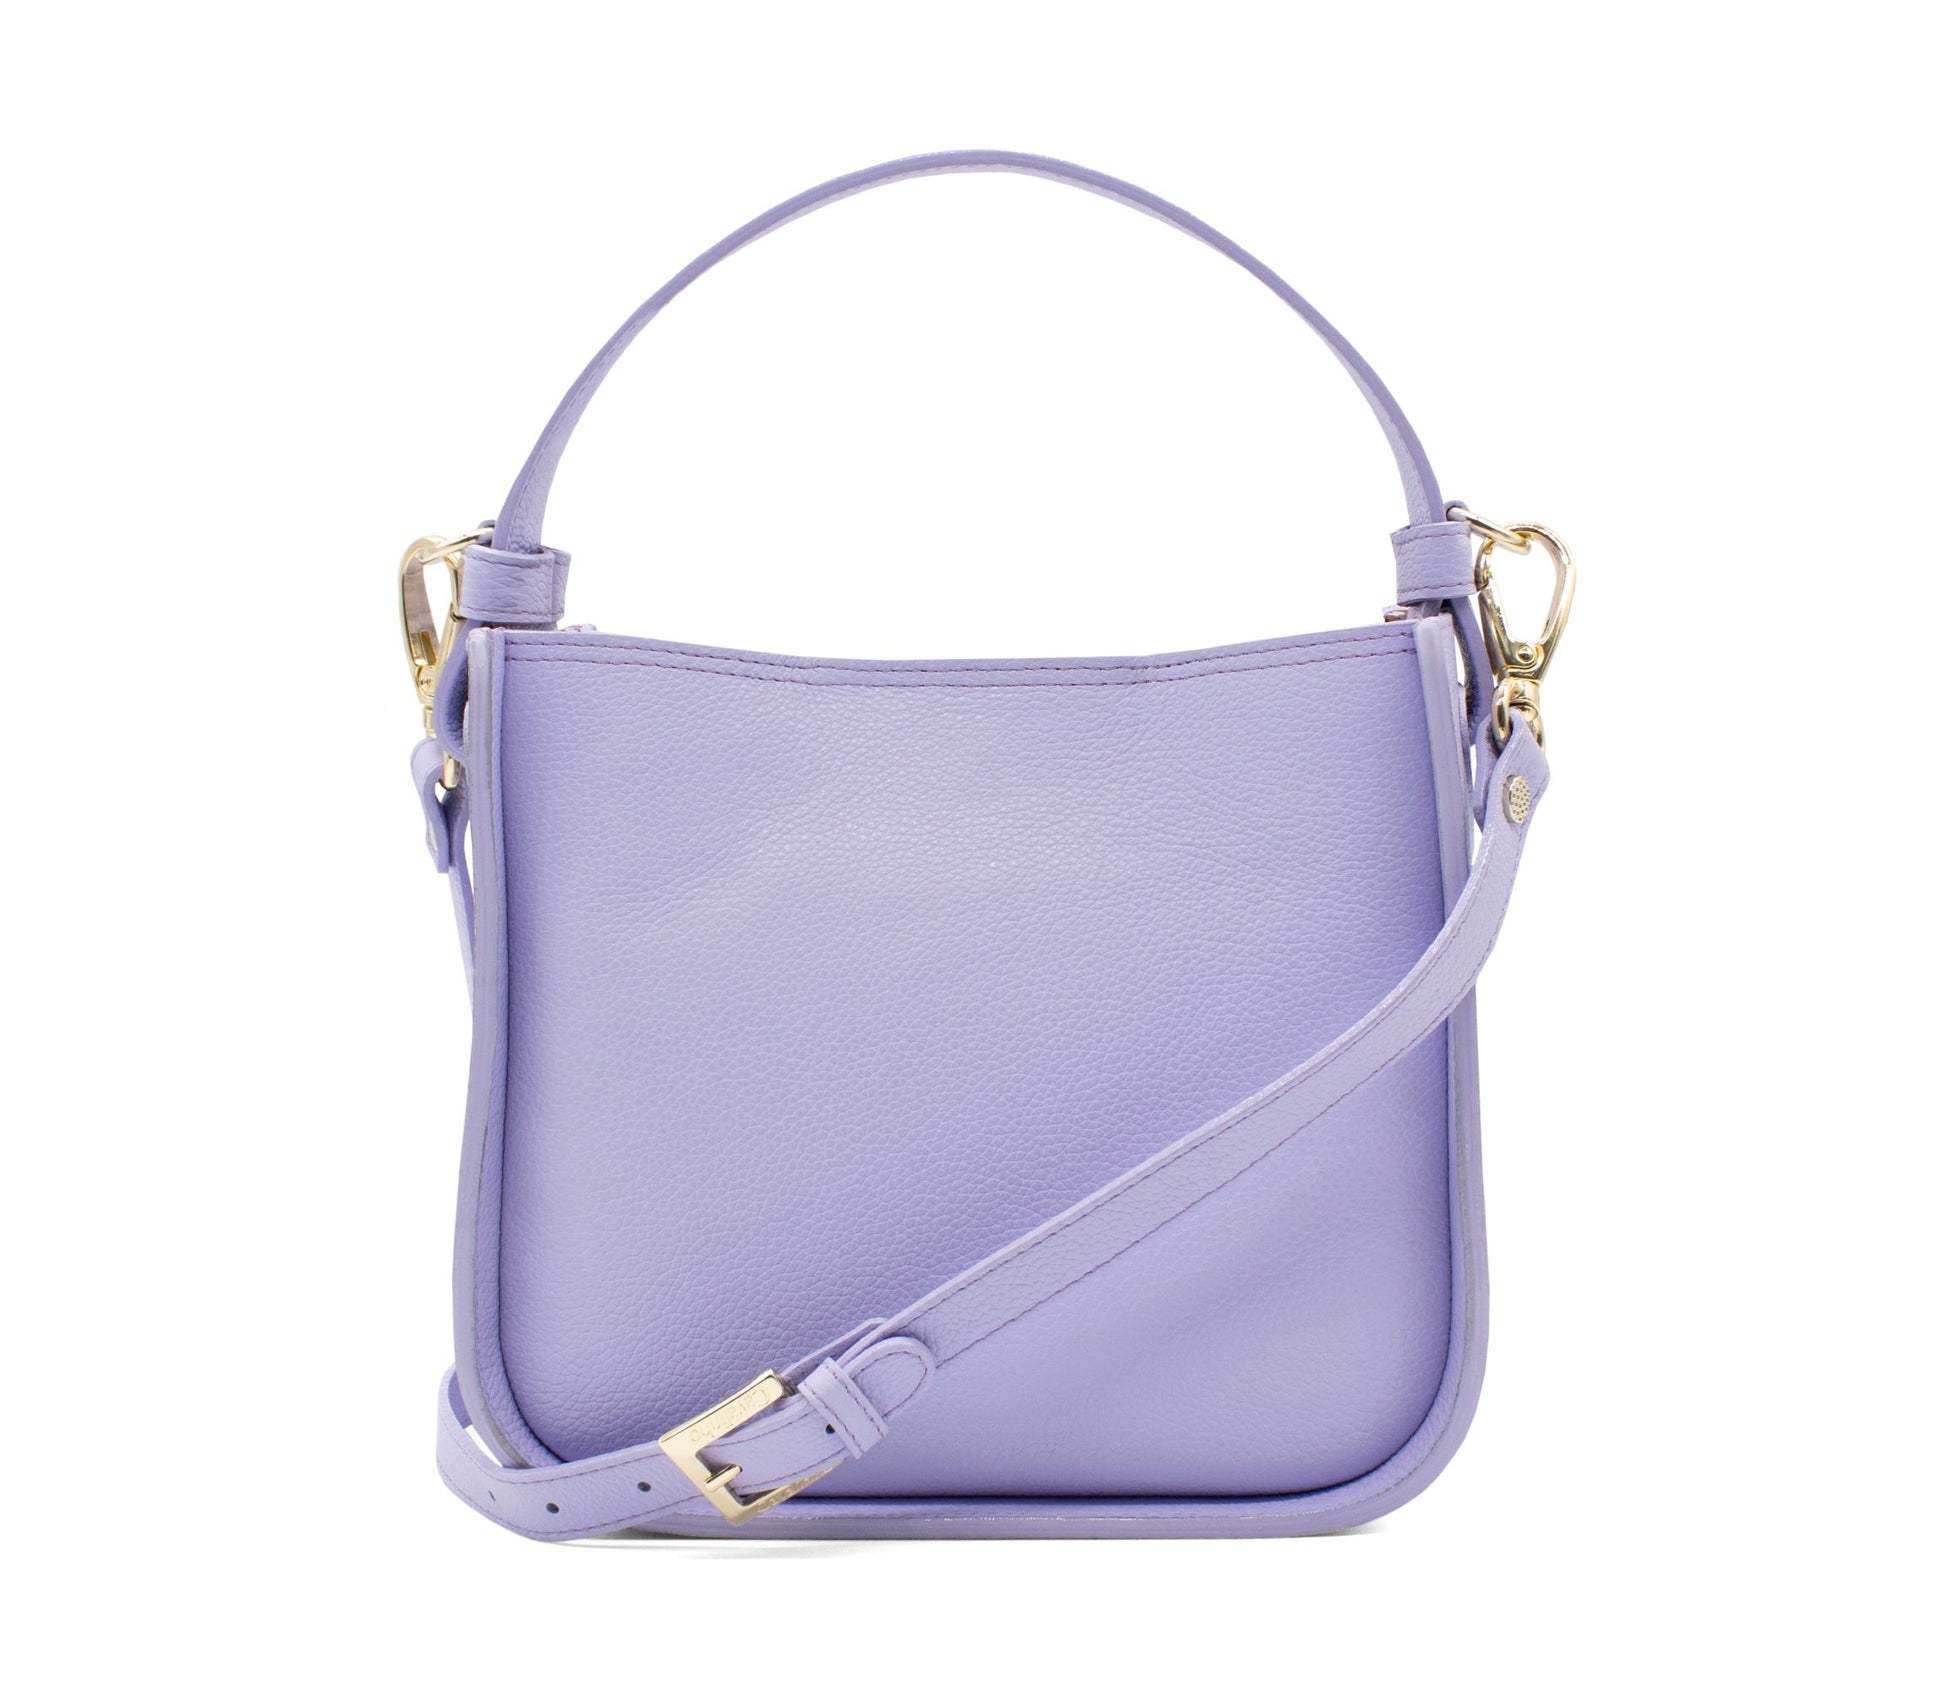 Cavalinho Muse Leather Handbag - Lilac - 18300475.39_4